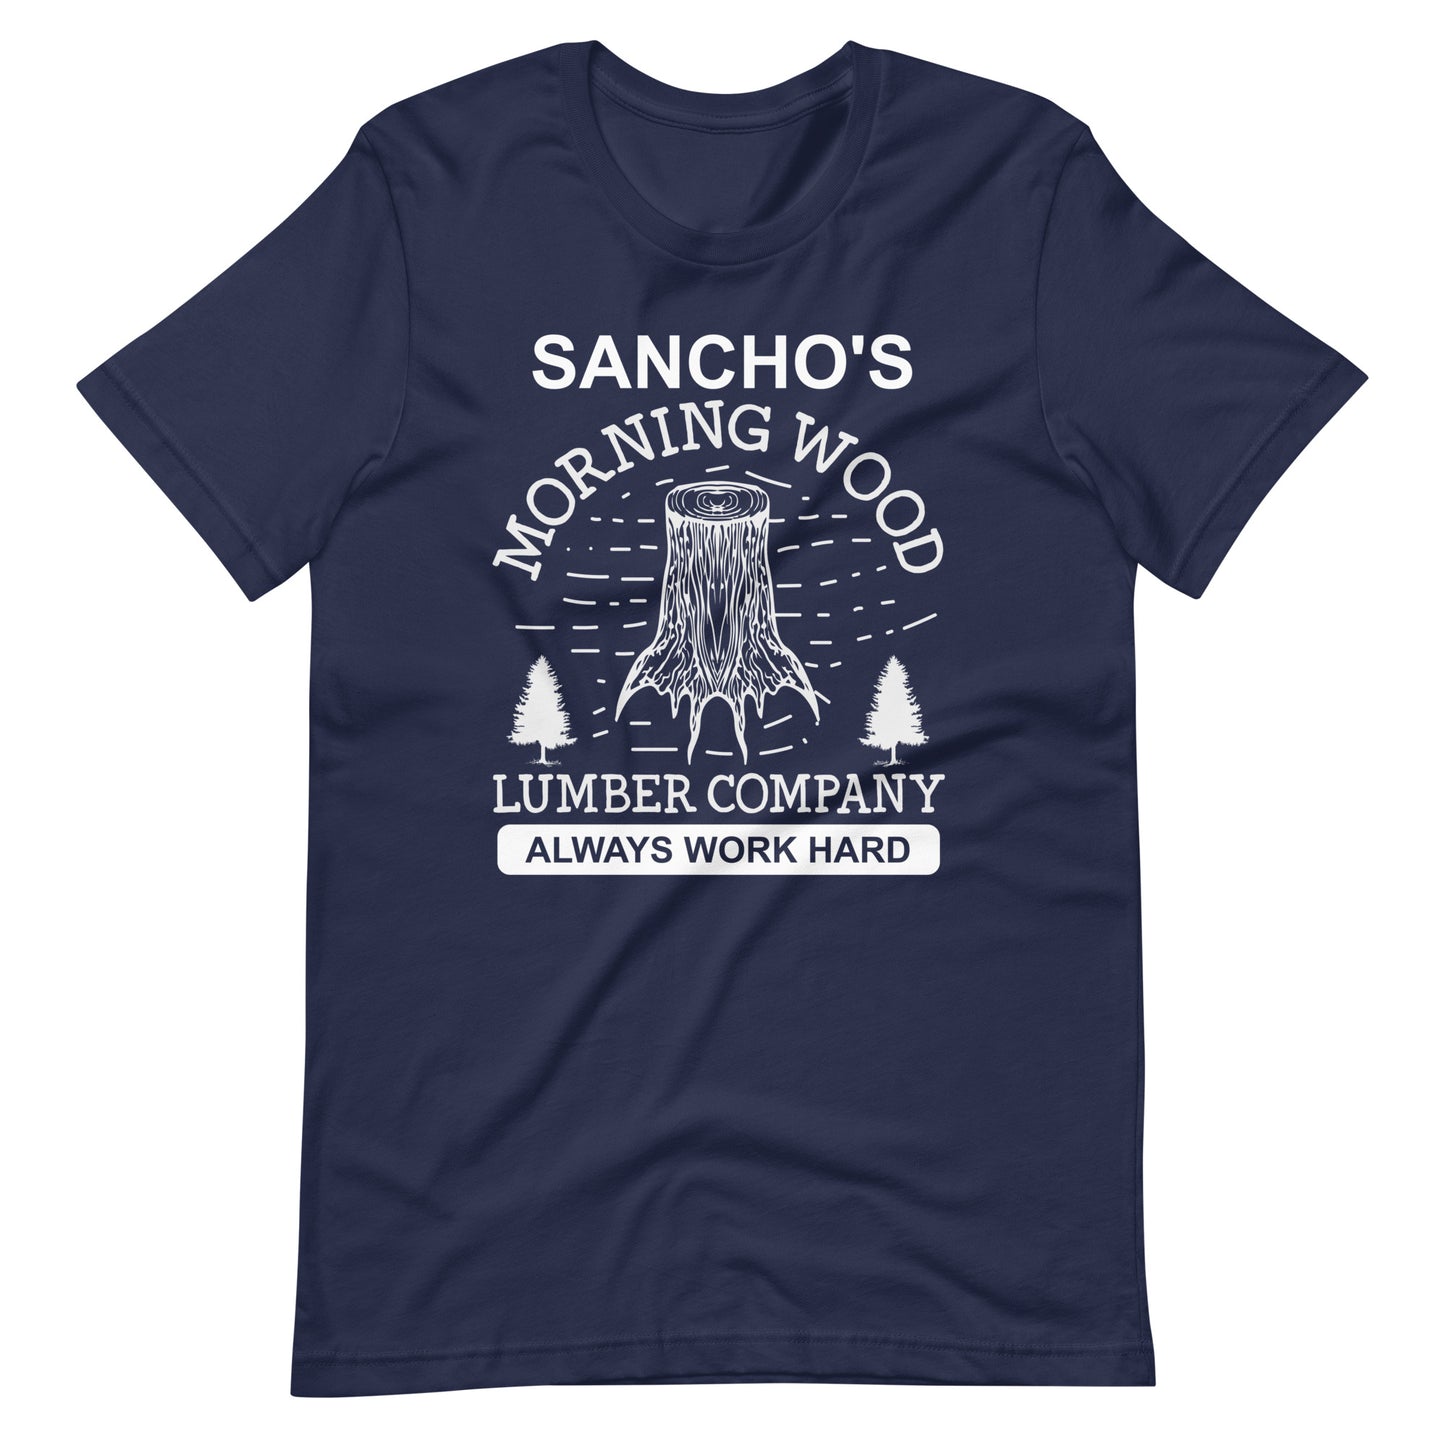 Sancho's Morning Wood Lumber Company T-Shirt